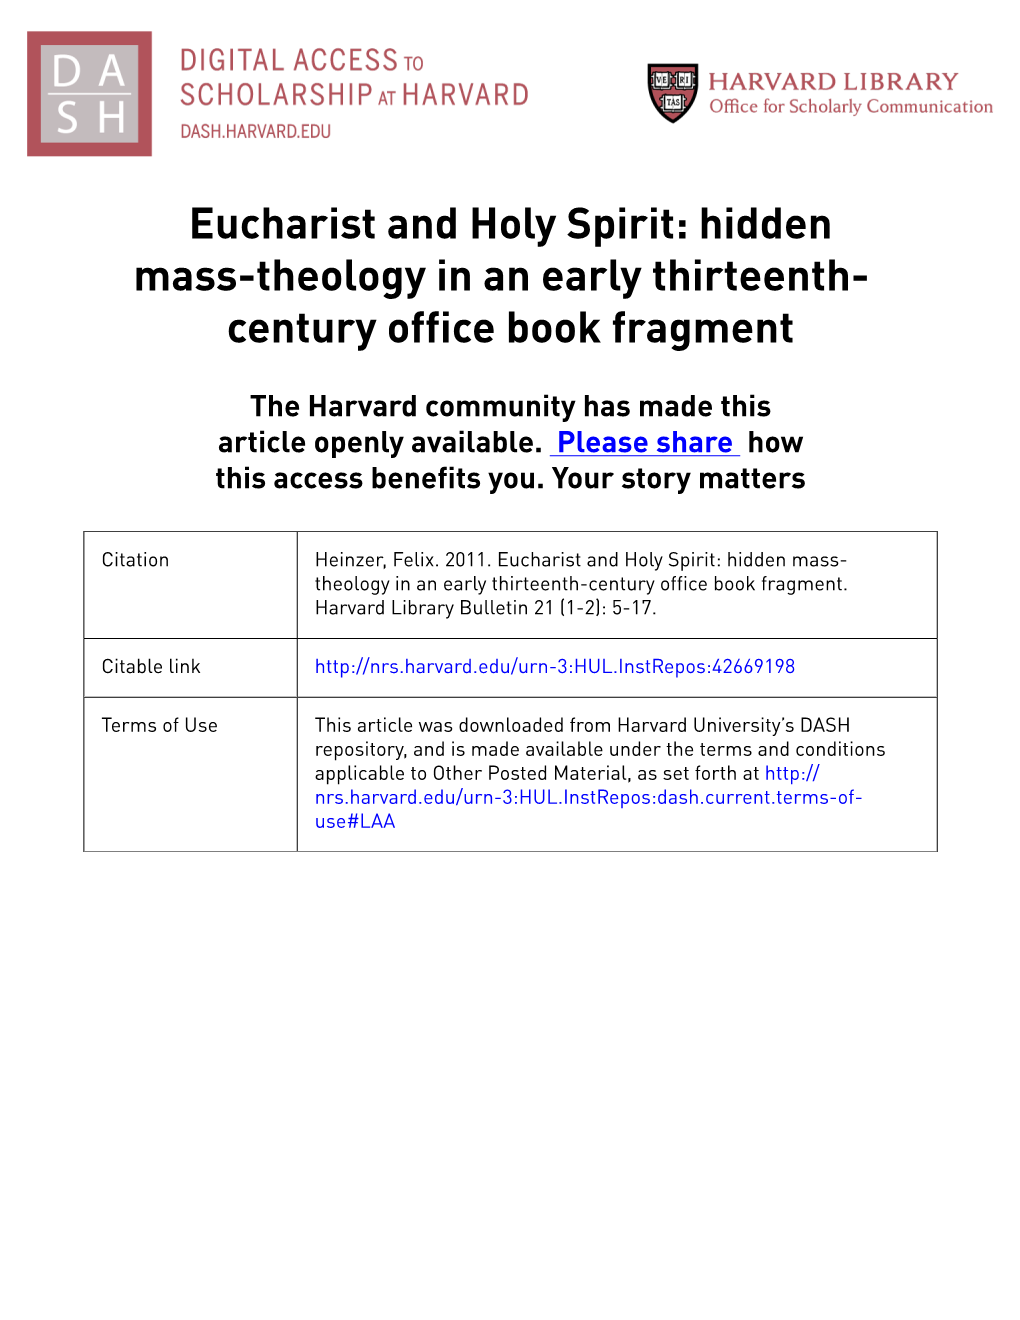 Eucharist and Holy Spirit: Hidden Mass-Theology in an Early Thirteenth- Century Office Book Fragment